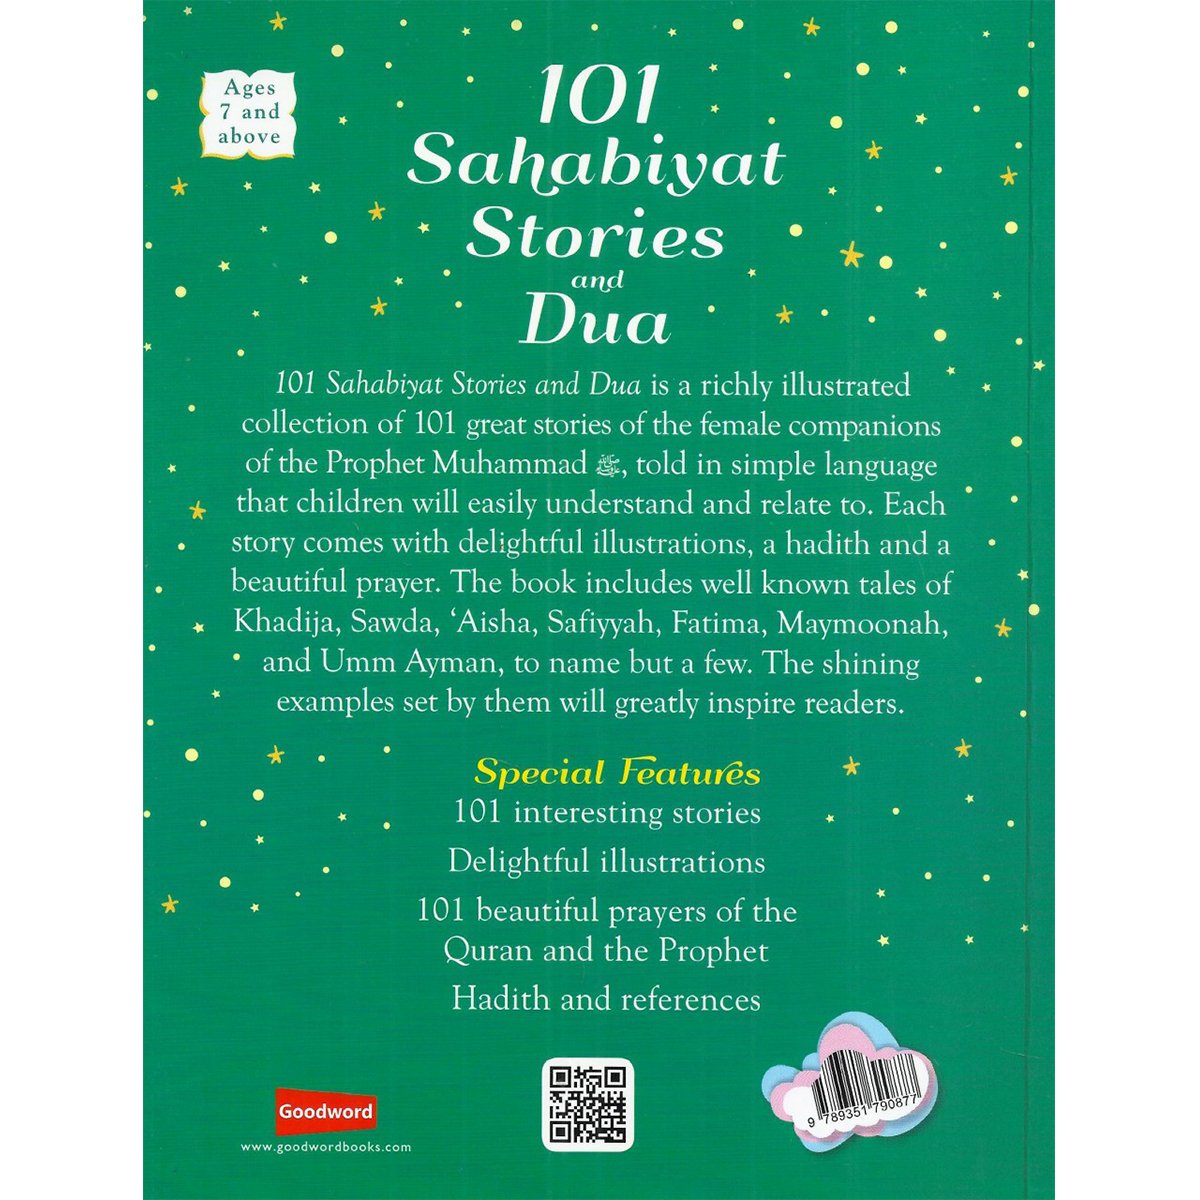 101 Sahabiyat Stories and Dua-almanaar Islamic Store